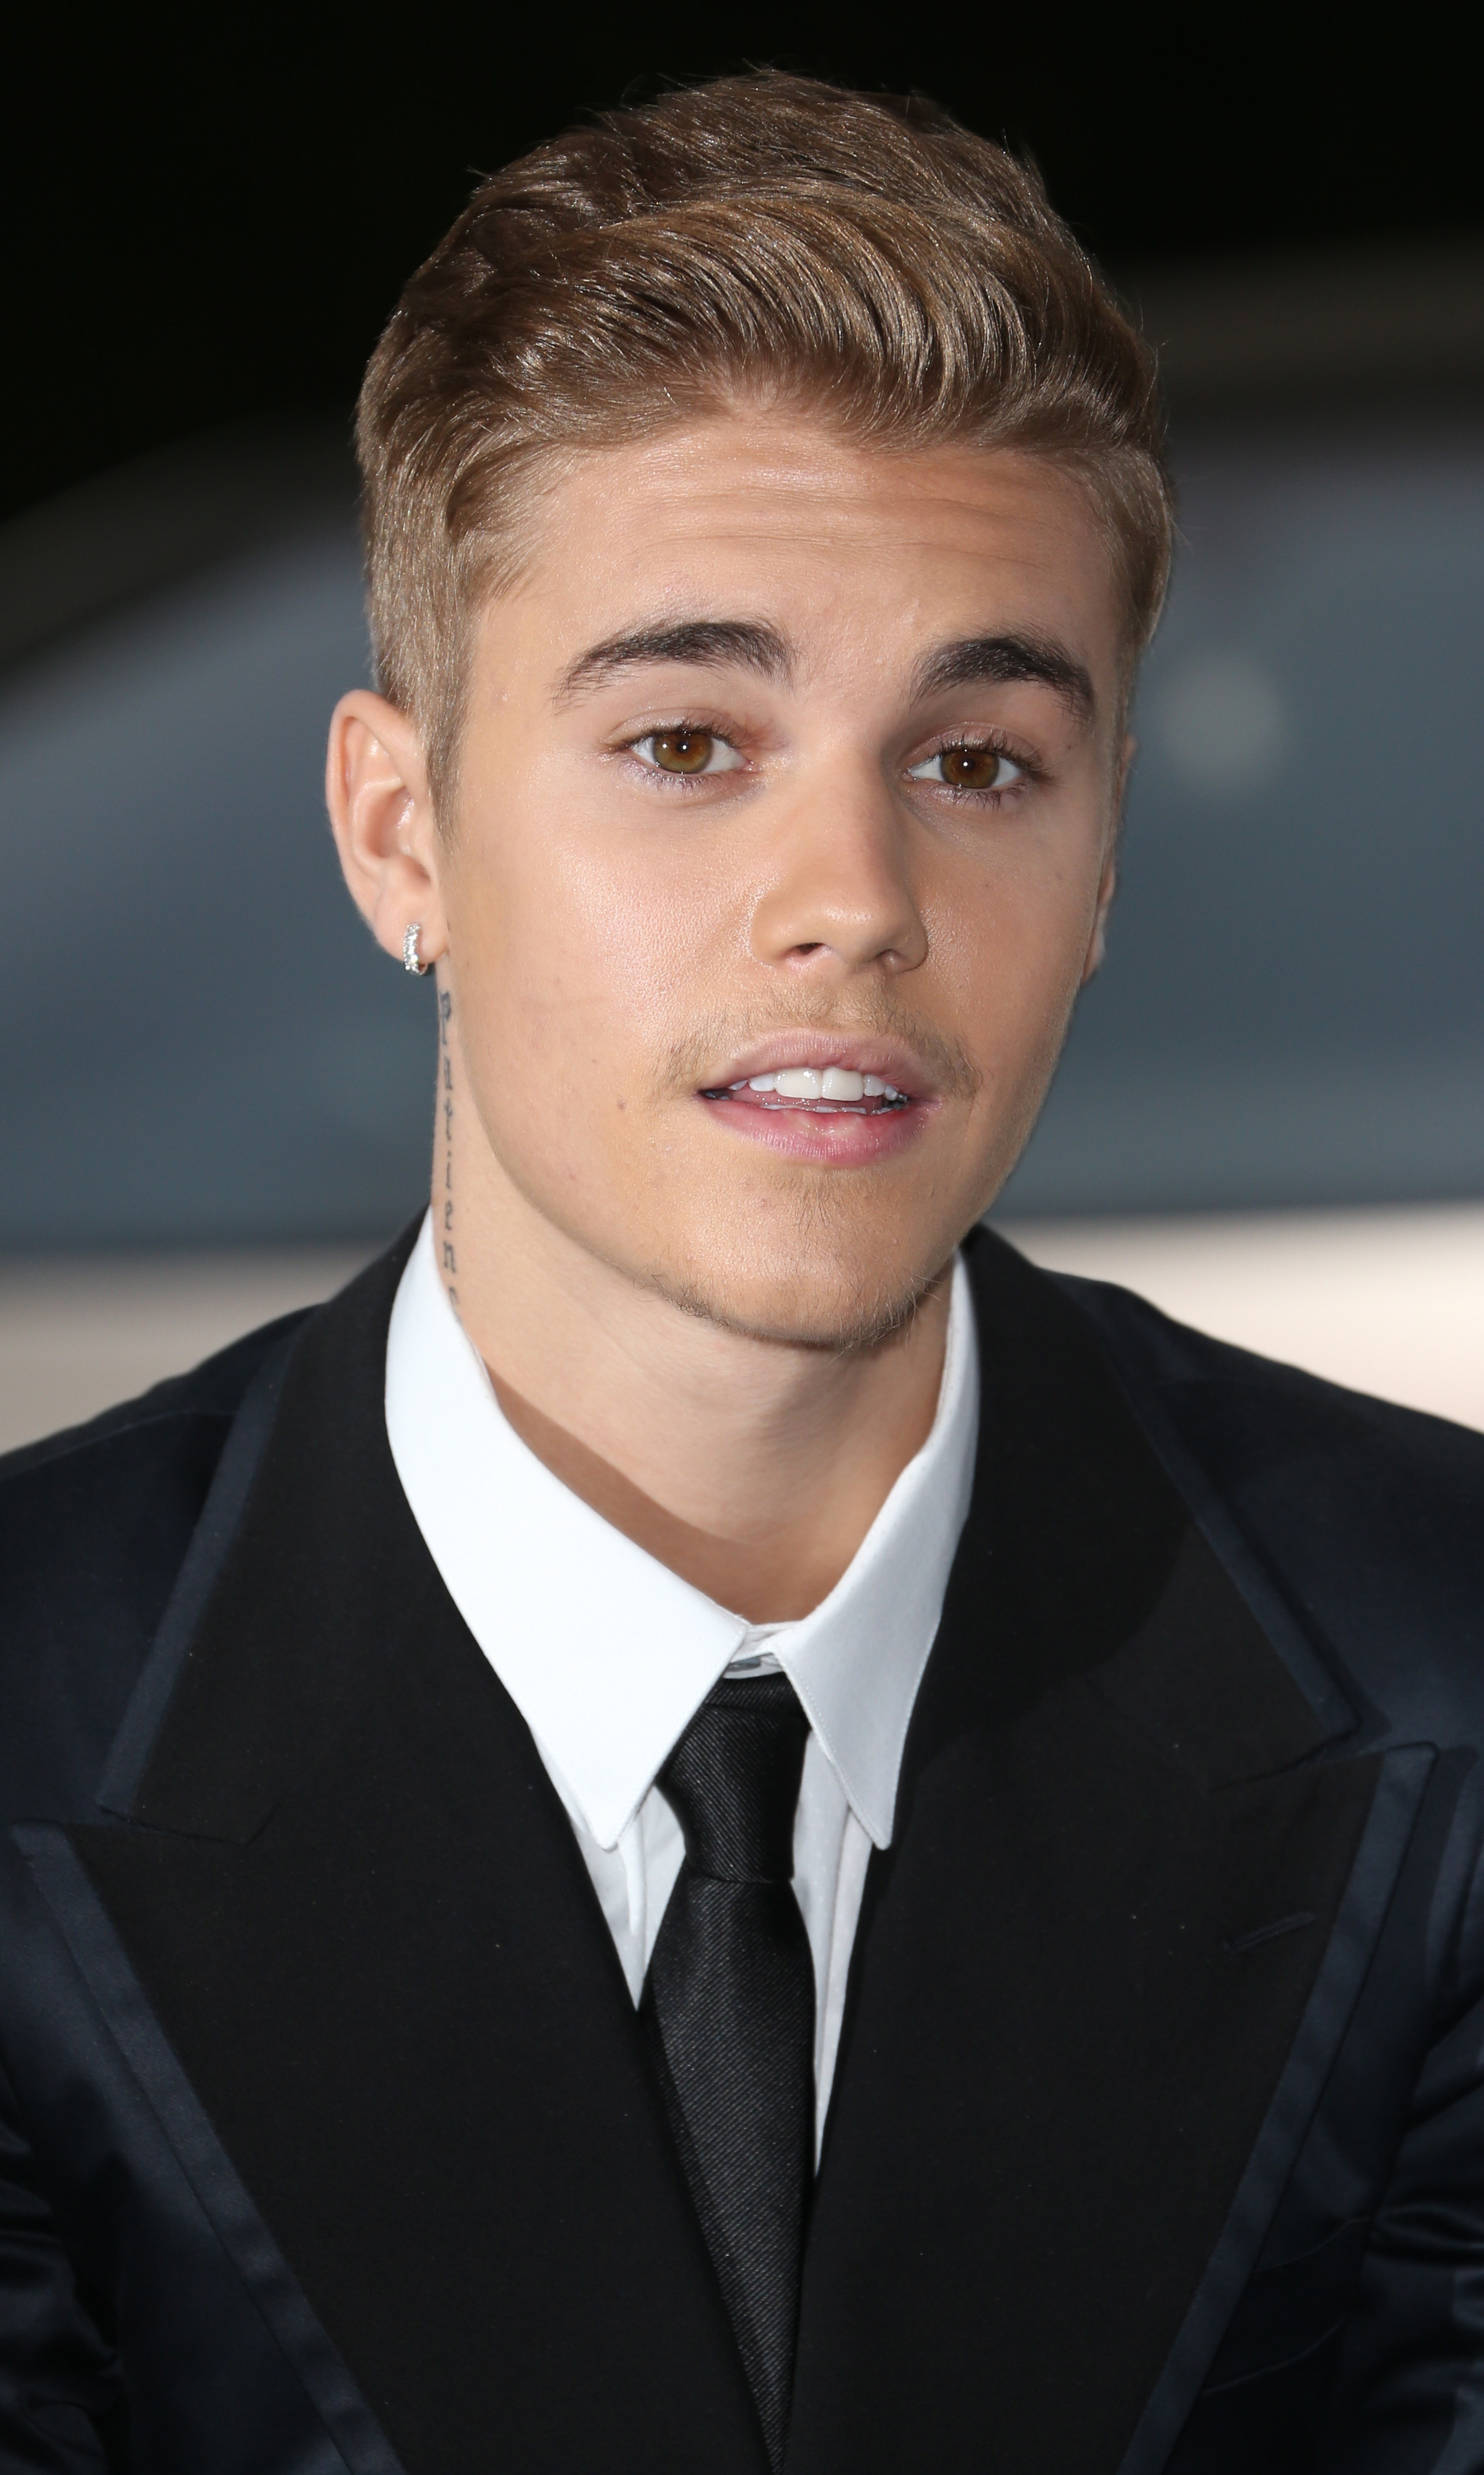 Canadian singer Justin Bieber attends the Cinema Against AIDS amfAR gala 2014 held at the Hotel du Cap, Eden Roc in Cap d'Antibes, France, 22 May 2014. (Hubert Boesl—dpa/AP)